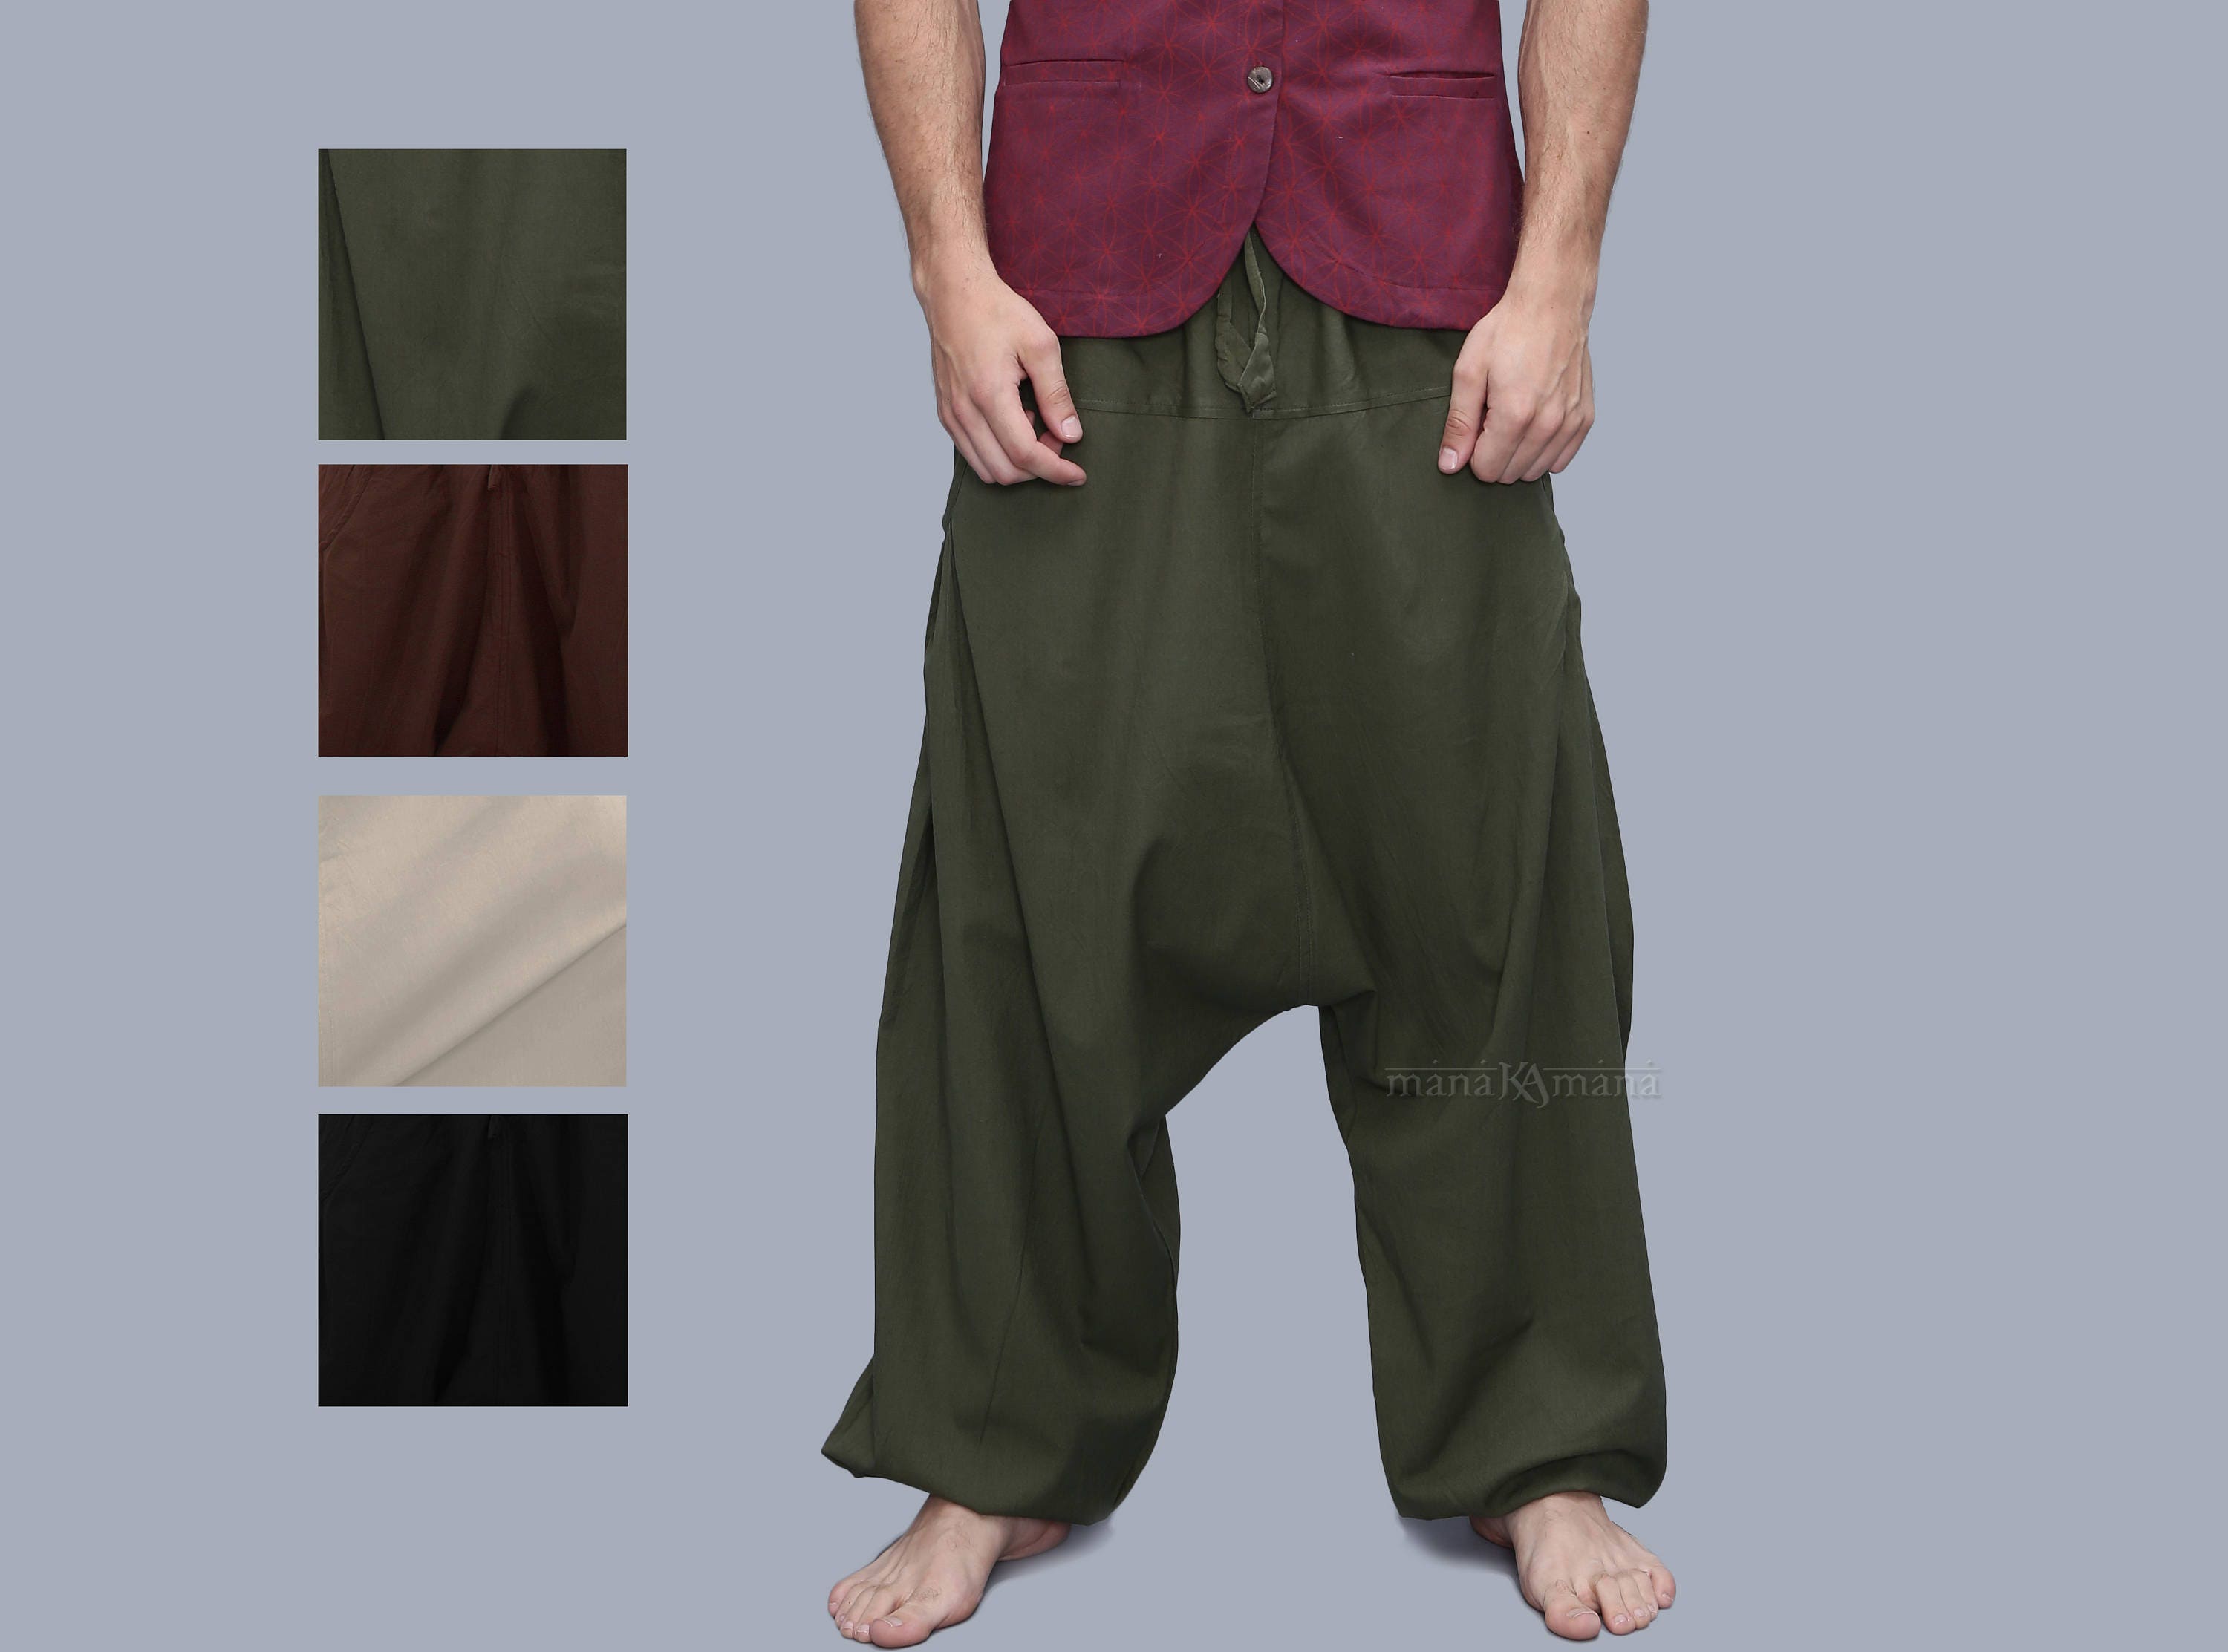 Harem Pants with pockets Aladdin Pants Harem Trousers Yoga | Etsy